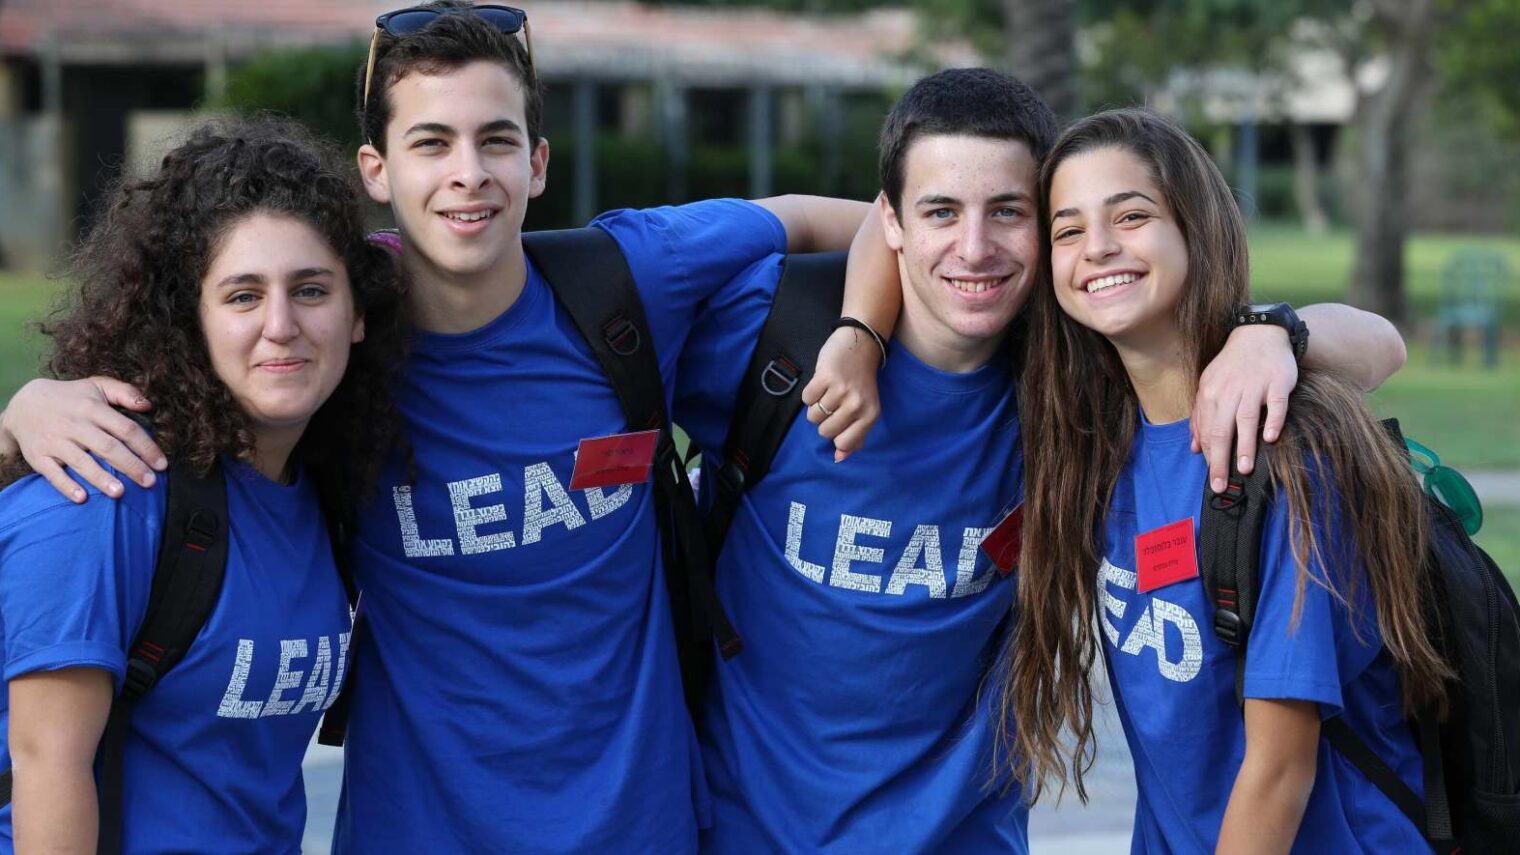 LEAD trains Israel’s leaders of the future through identity development. Photo by Sivan Farag